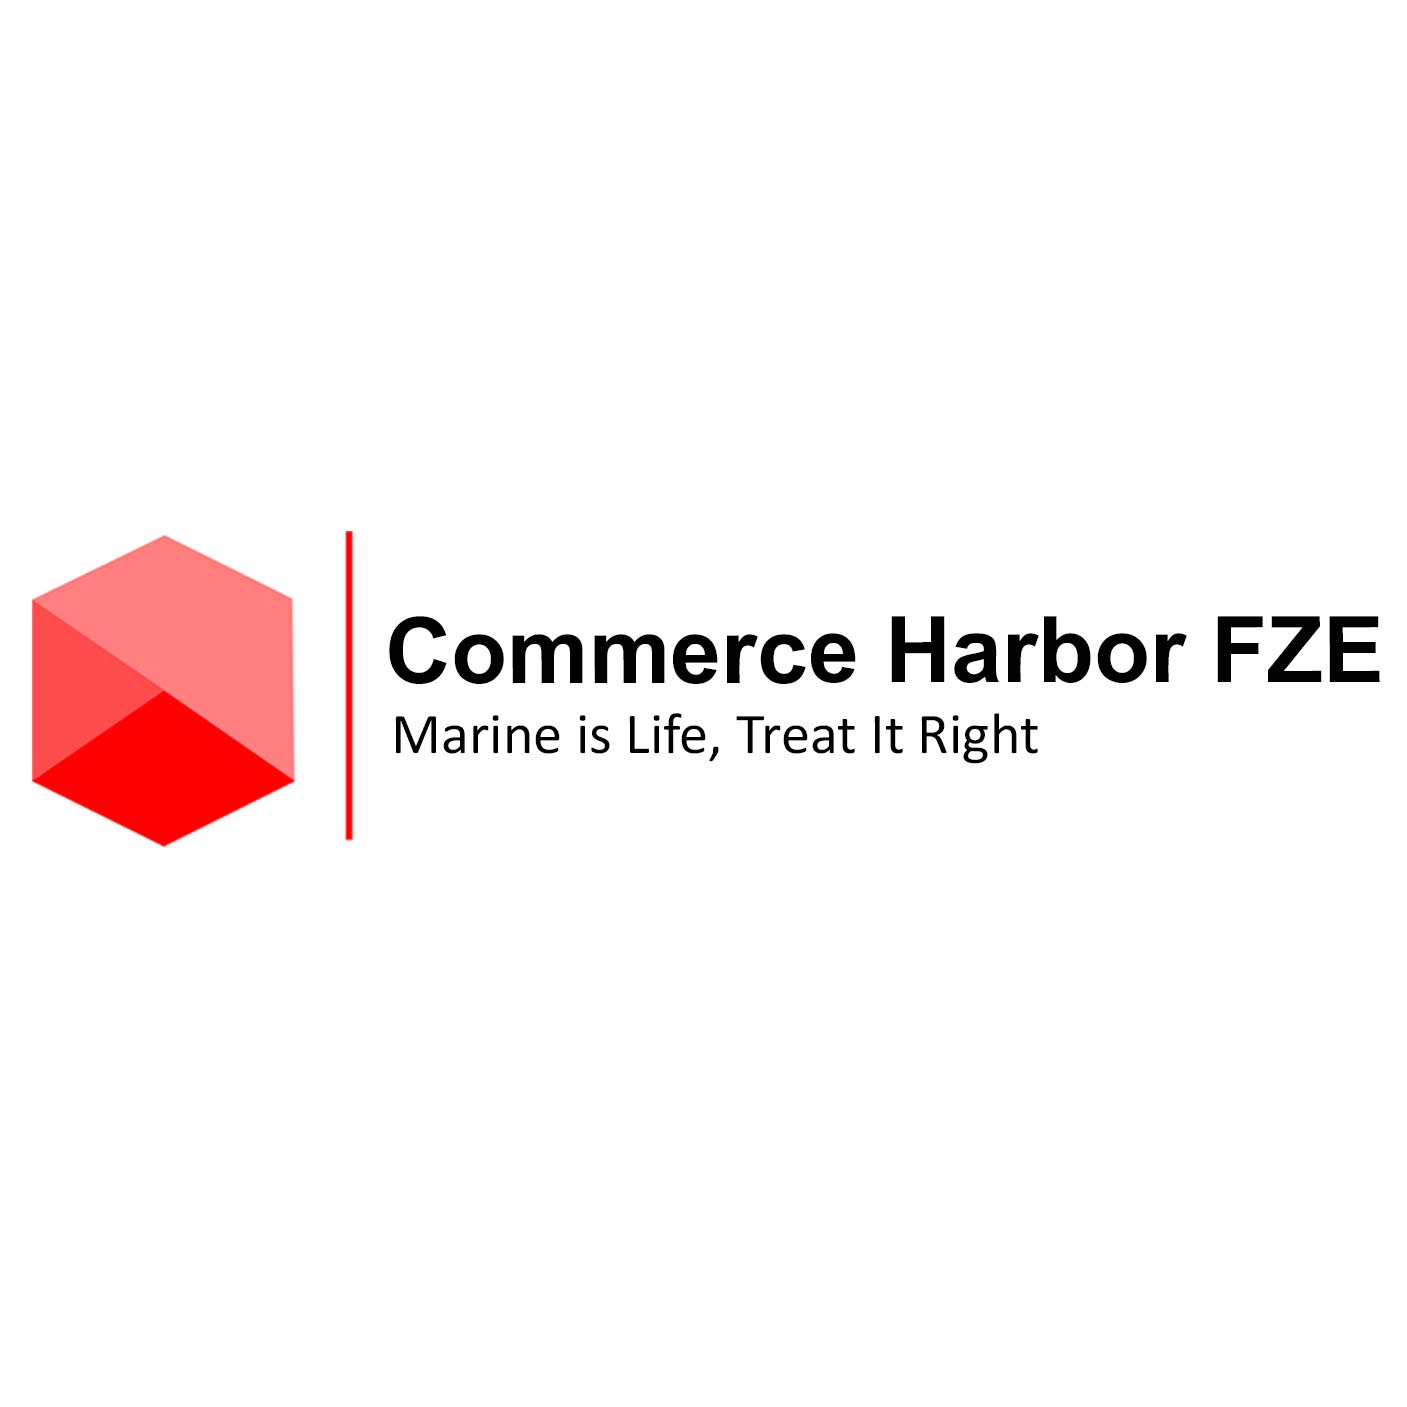 Ship Spare Parts - Commerce Harbor FZE